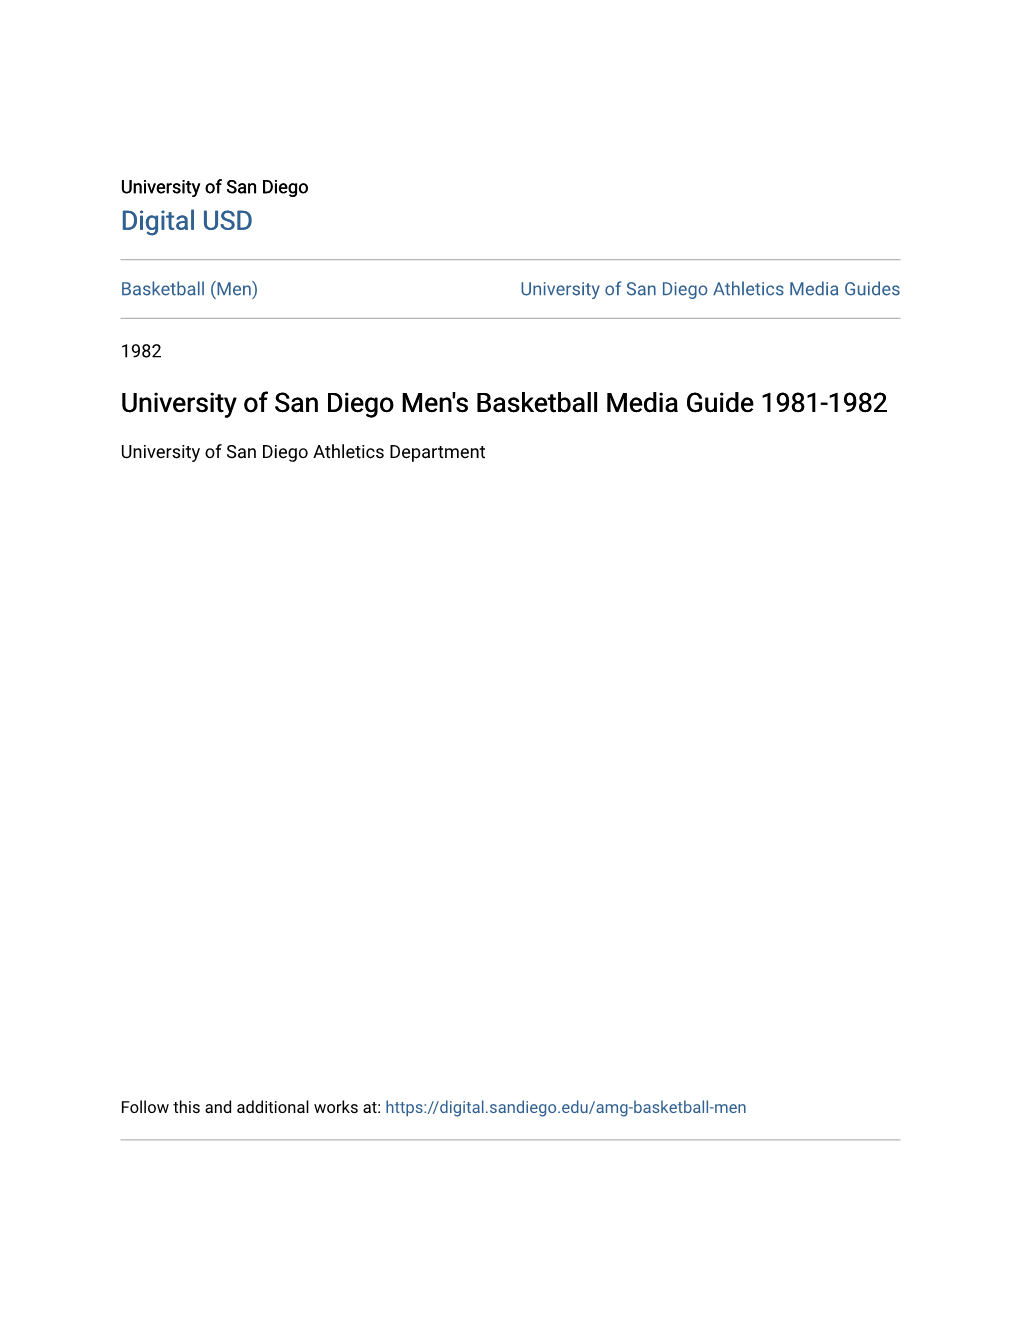 University of San Diego Men's Basketball Media Guide 1981-1982